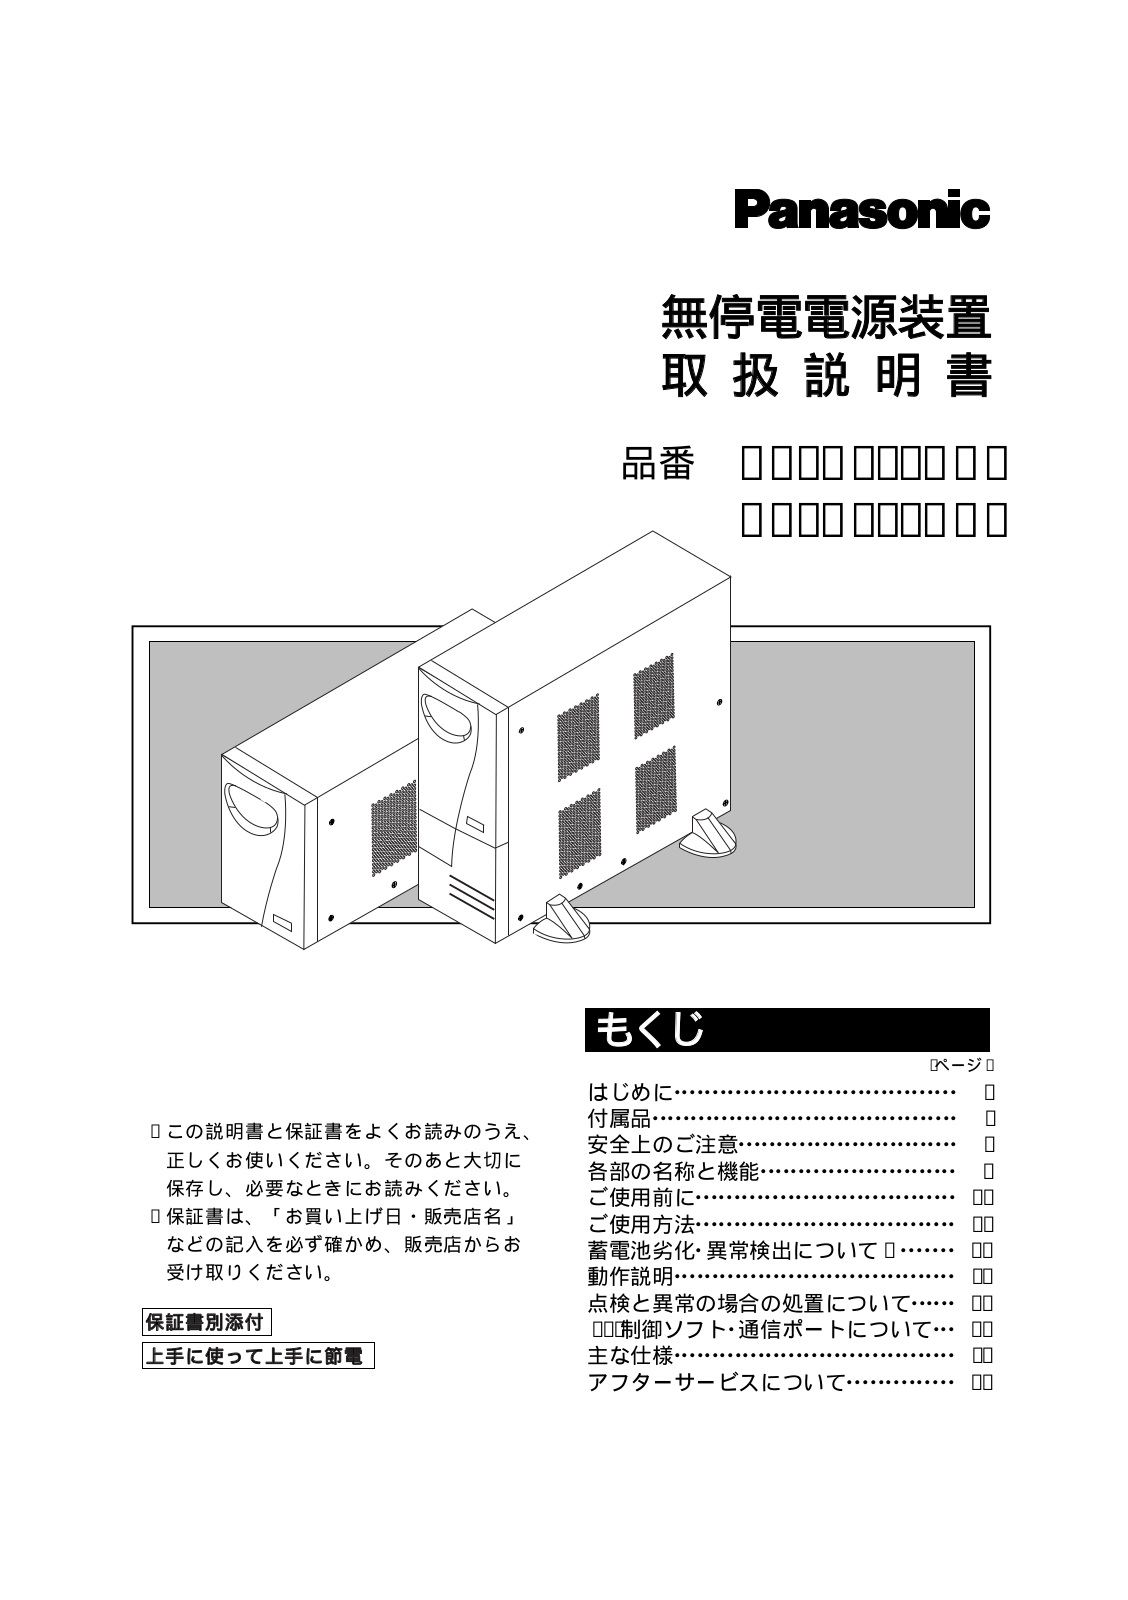 Panasonic DE-U102HD1, DE-U202HD1 User Manual